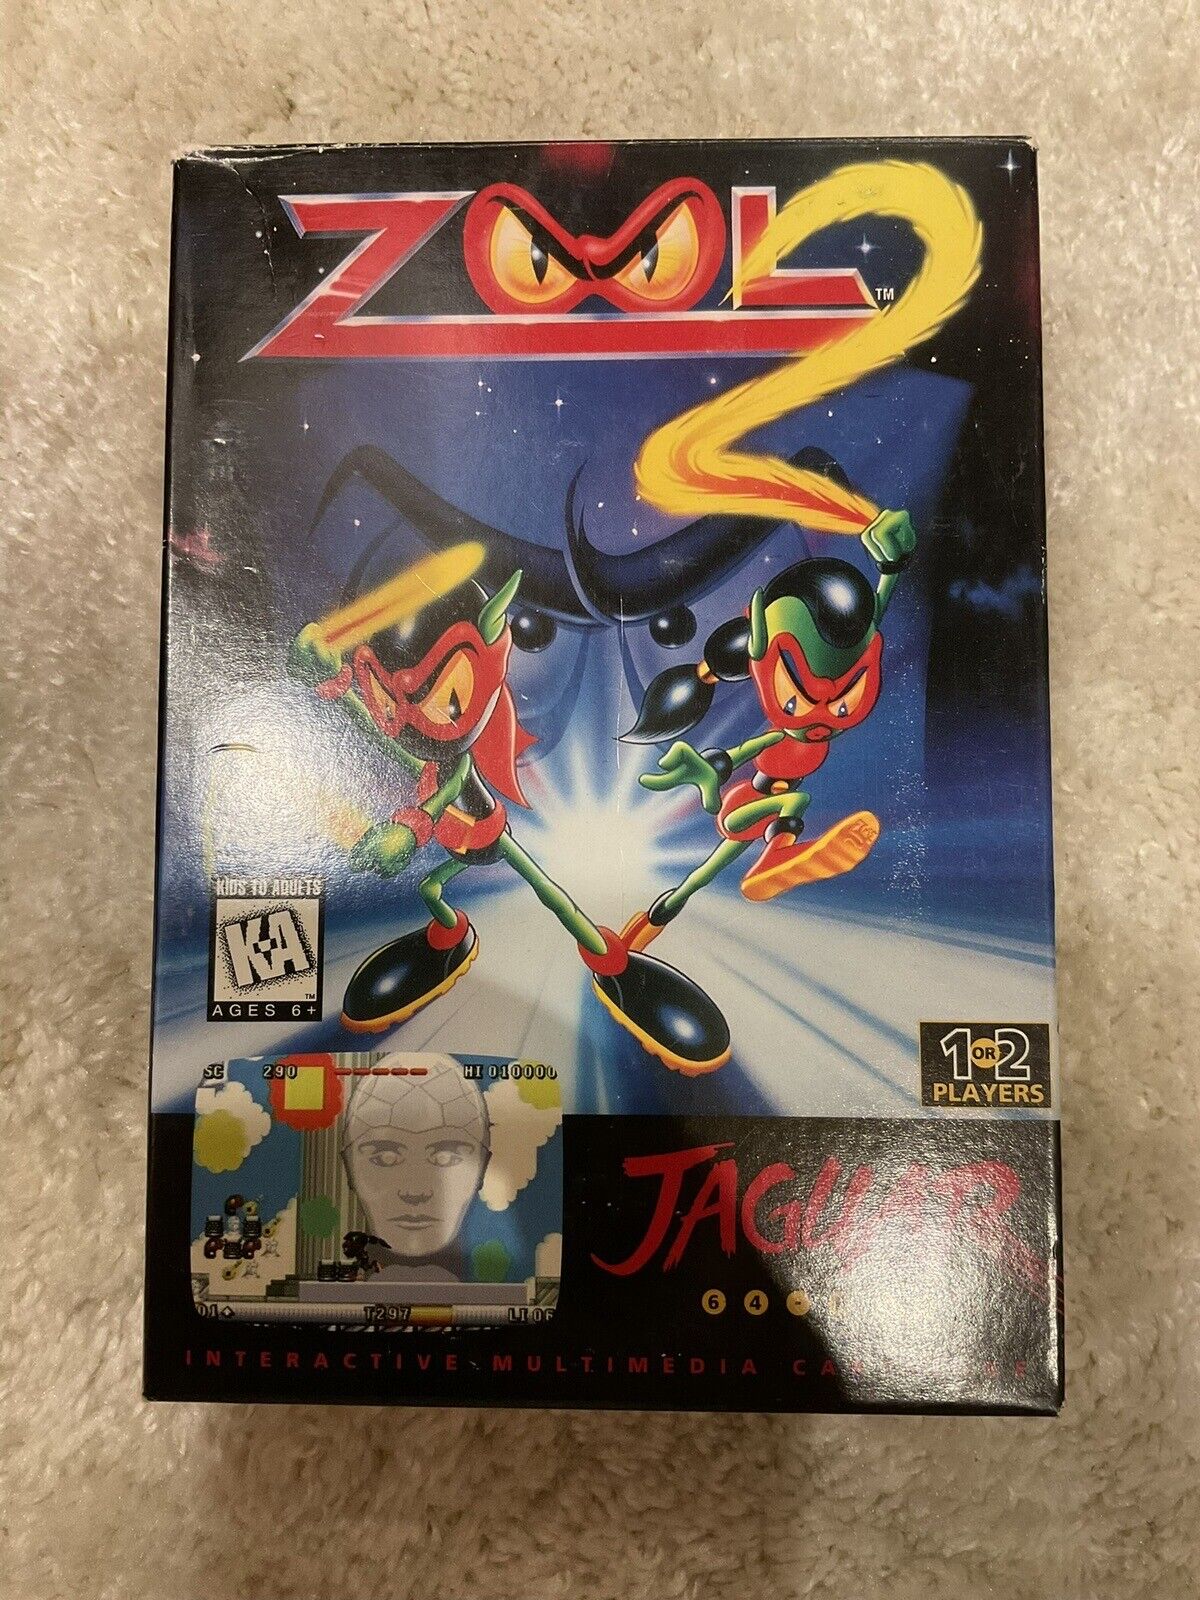 Zool 2 (Atari Jaguar) With Box & Manual